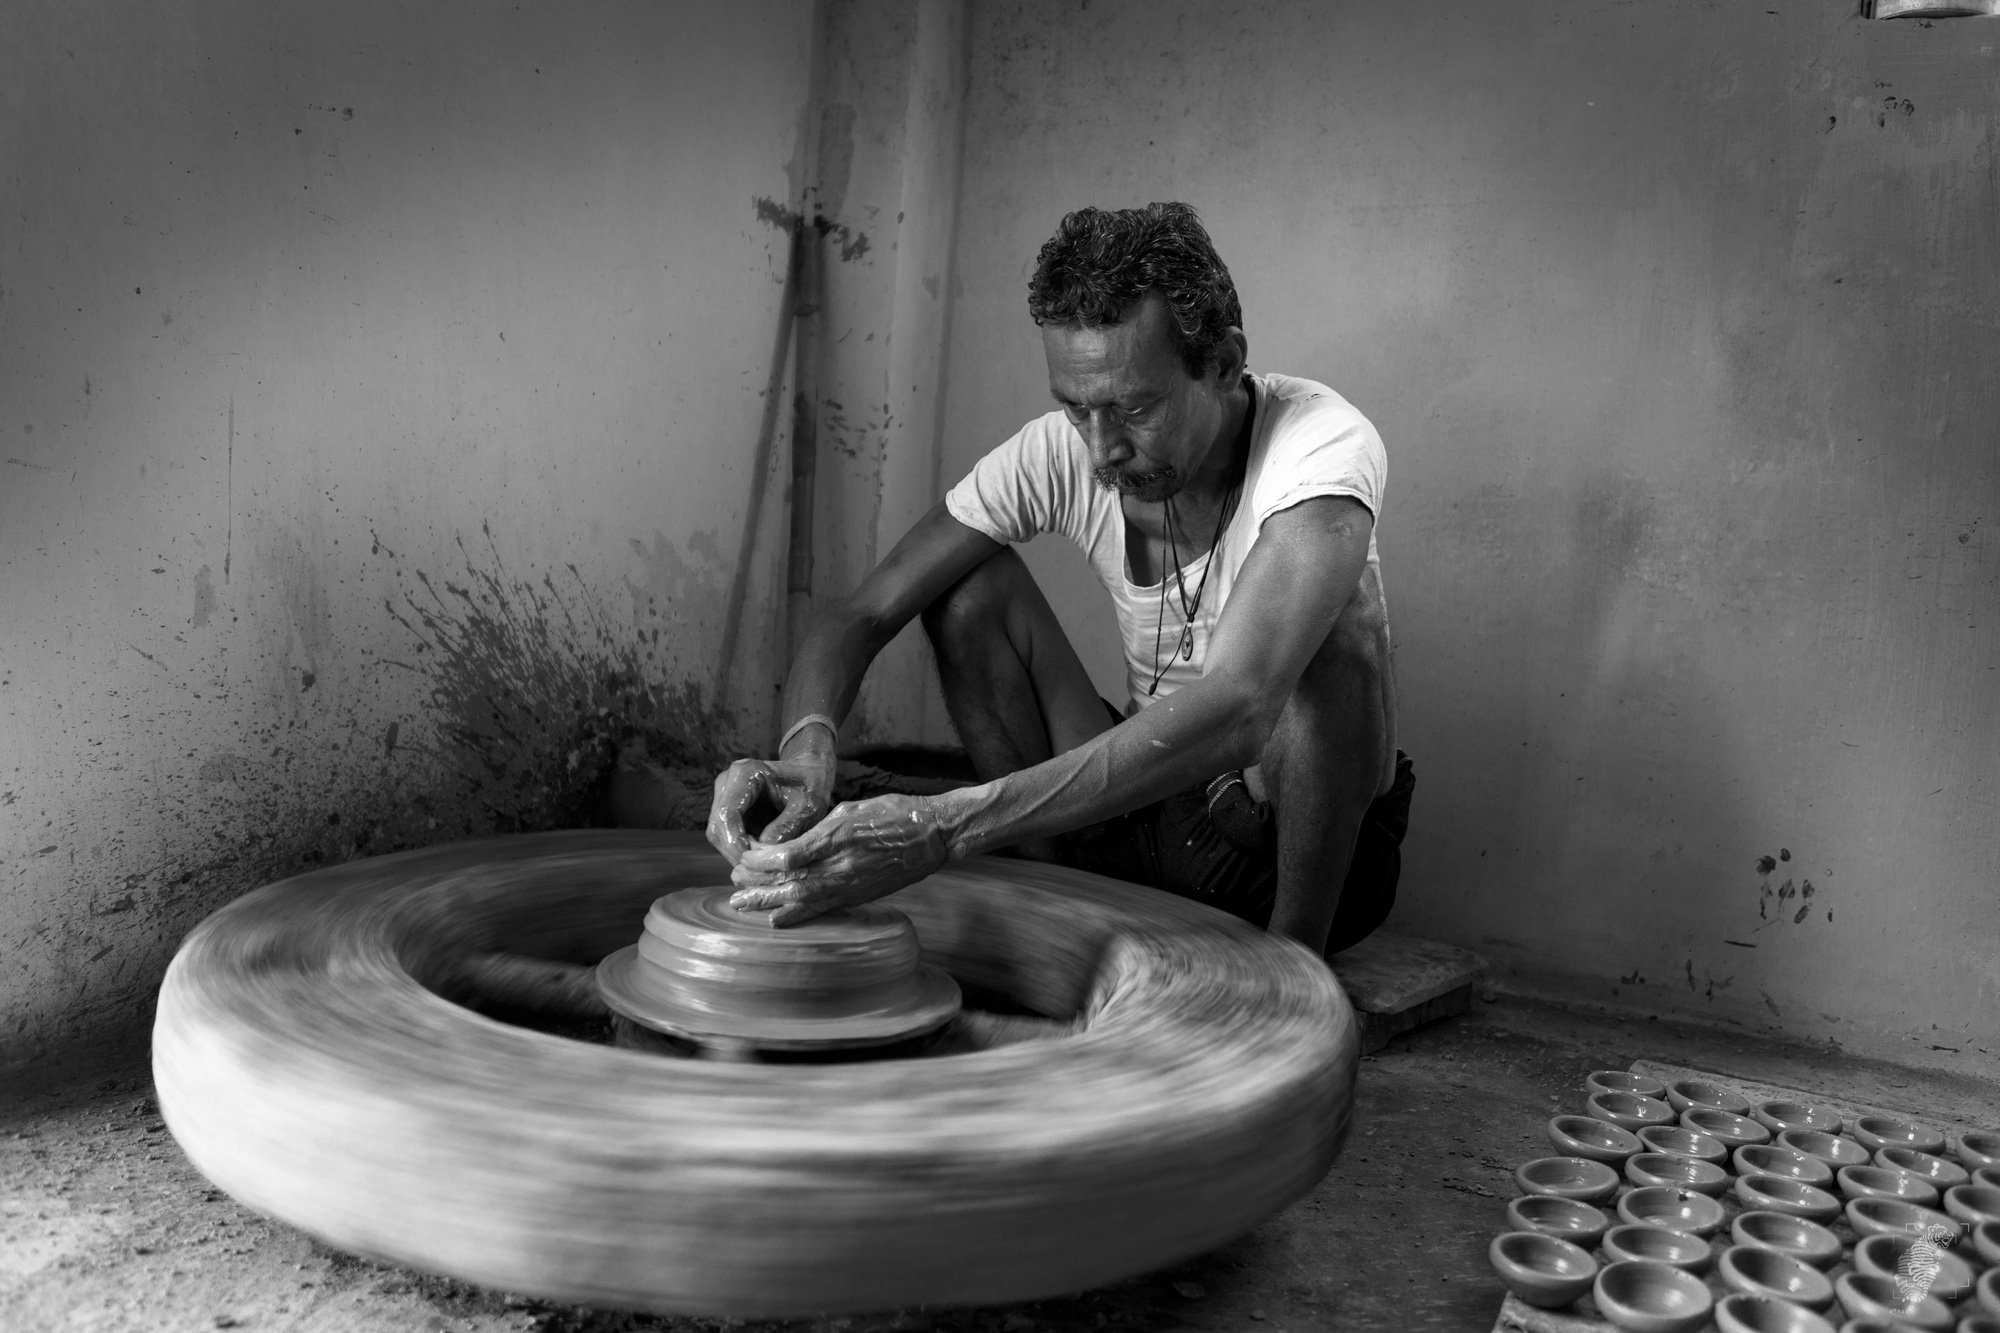 #candid #monochrome #bnw #men at work #potter, Abhijit D